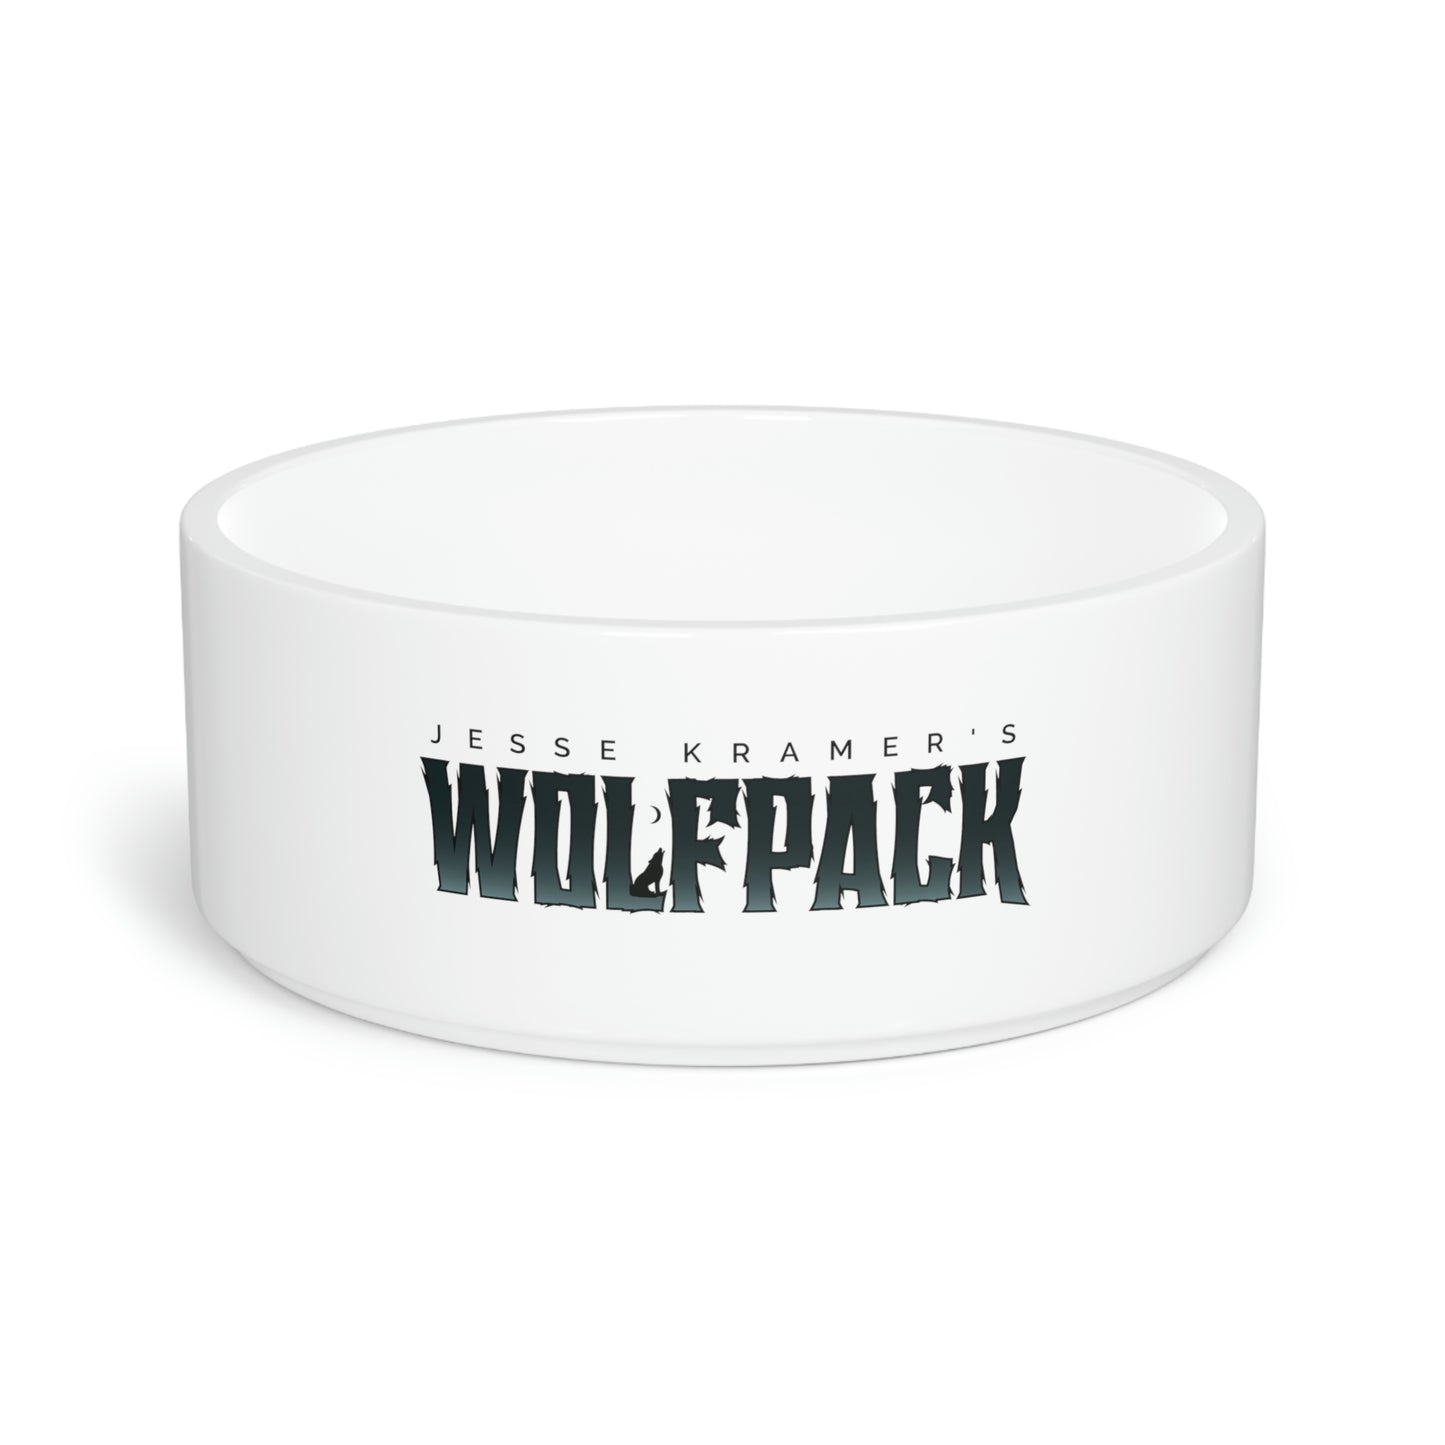 Wolfpack Pet Bowl